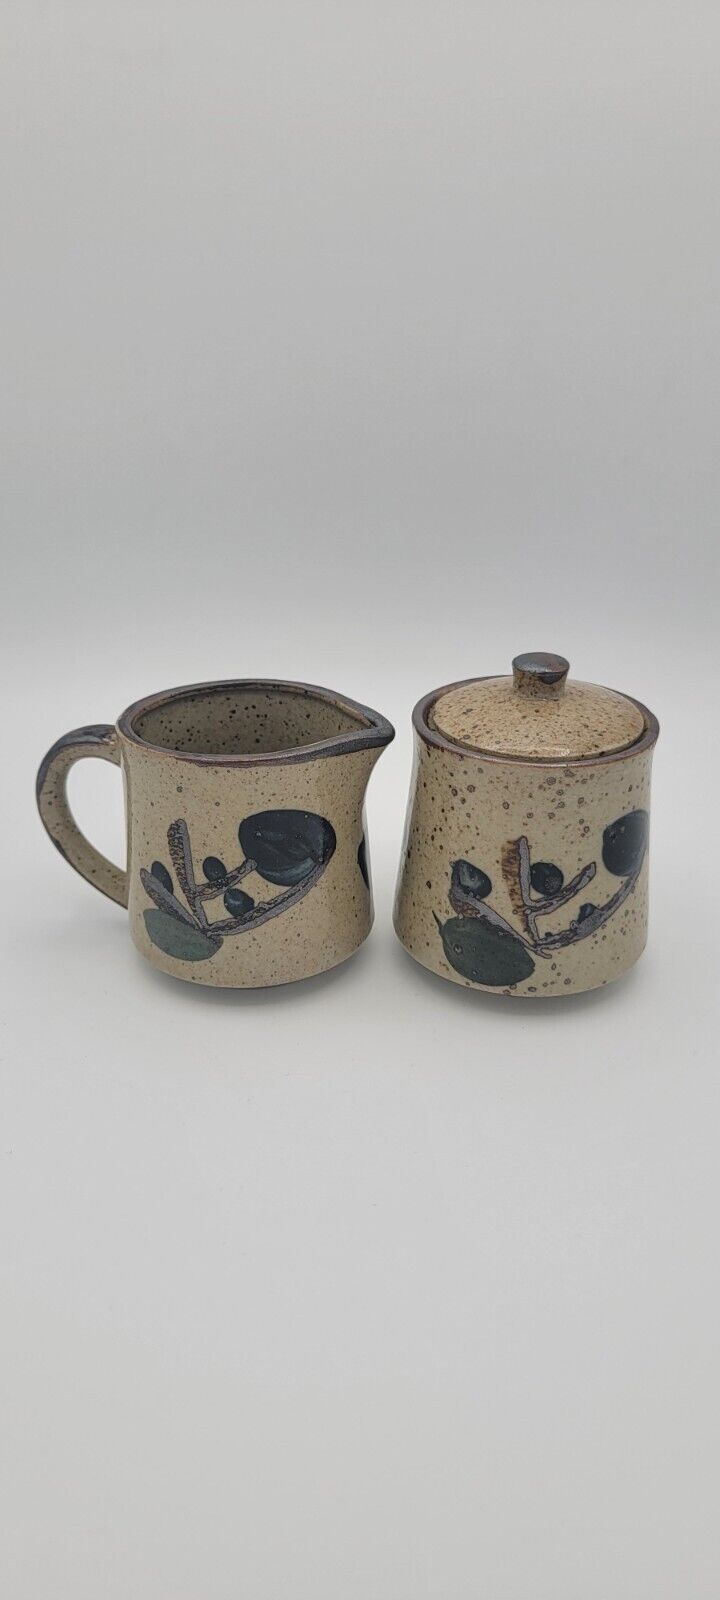 Vintage Creamer and Sugar Bowl Japanese Stoneware Otagiri style Coffee Accessory